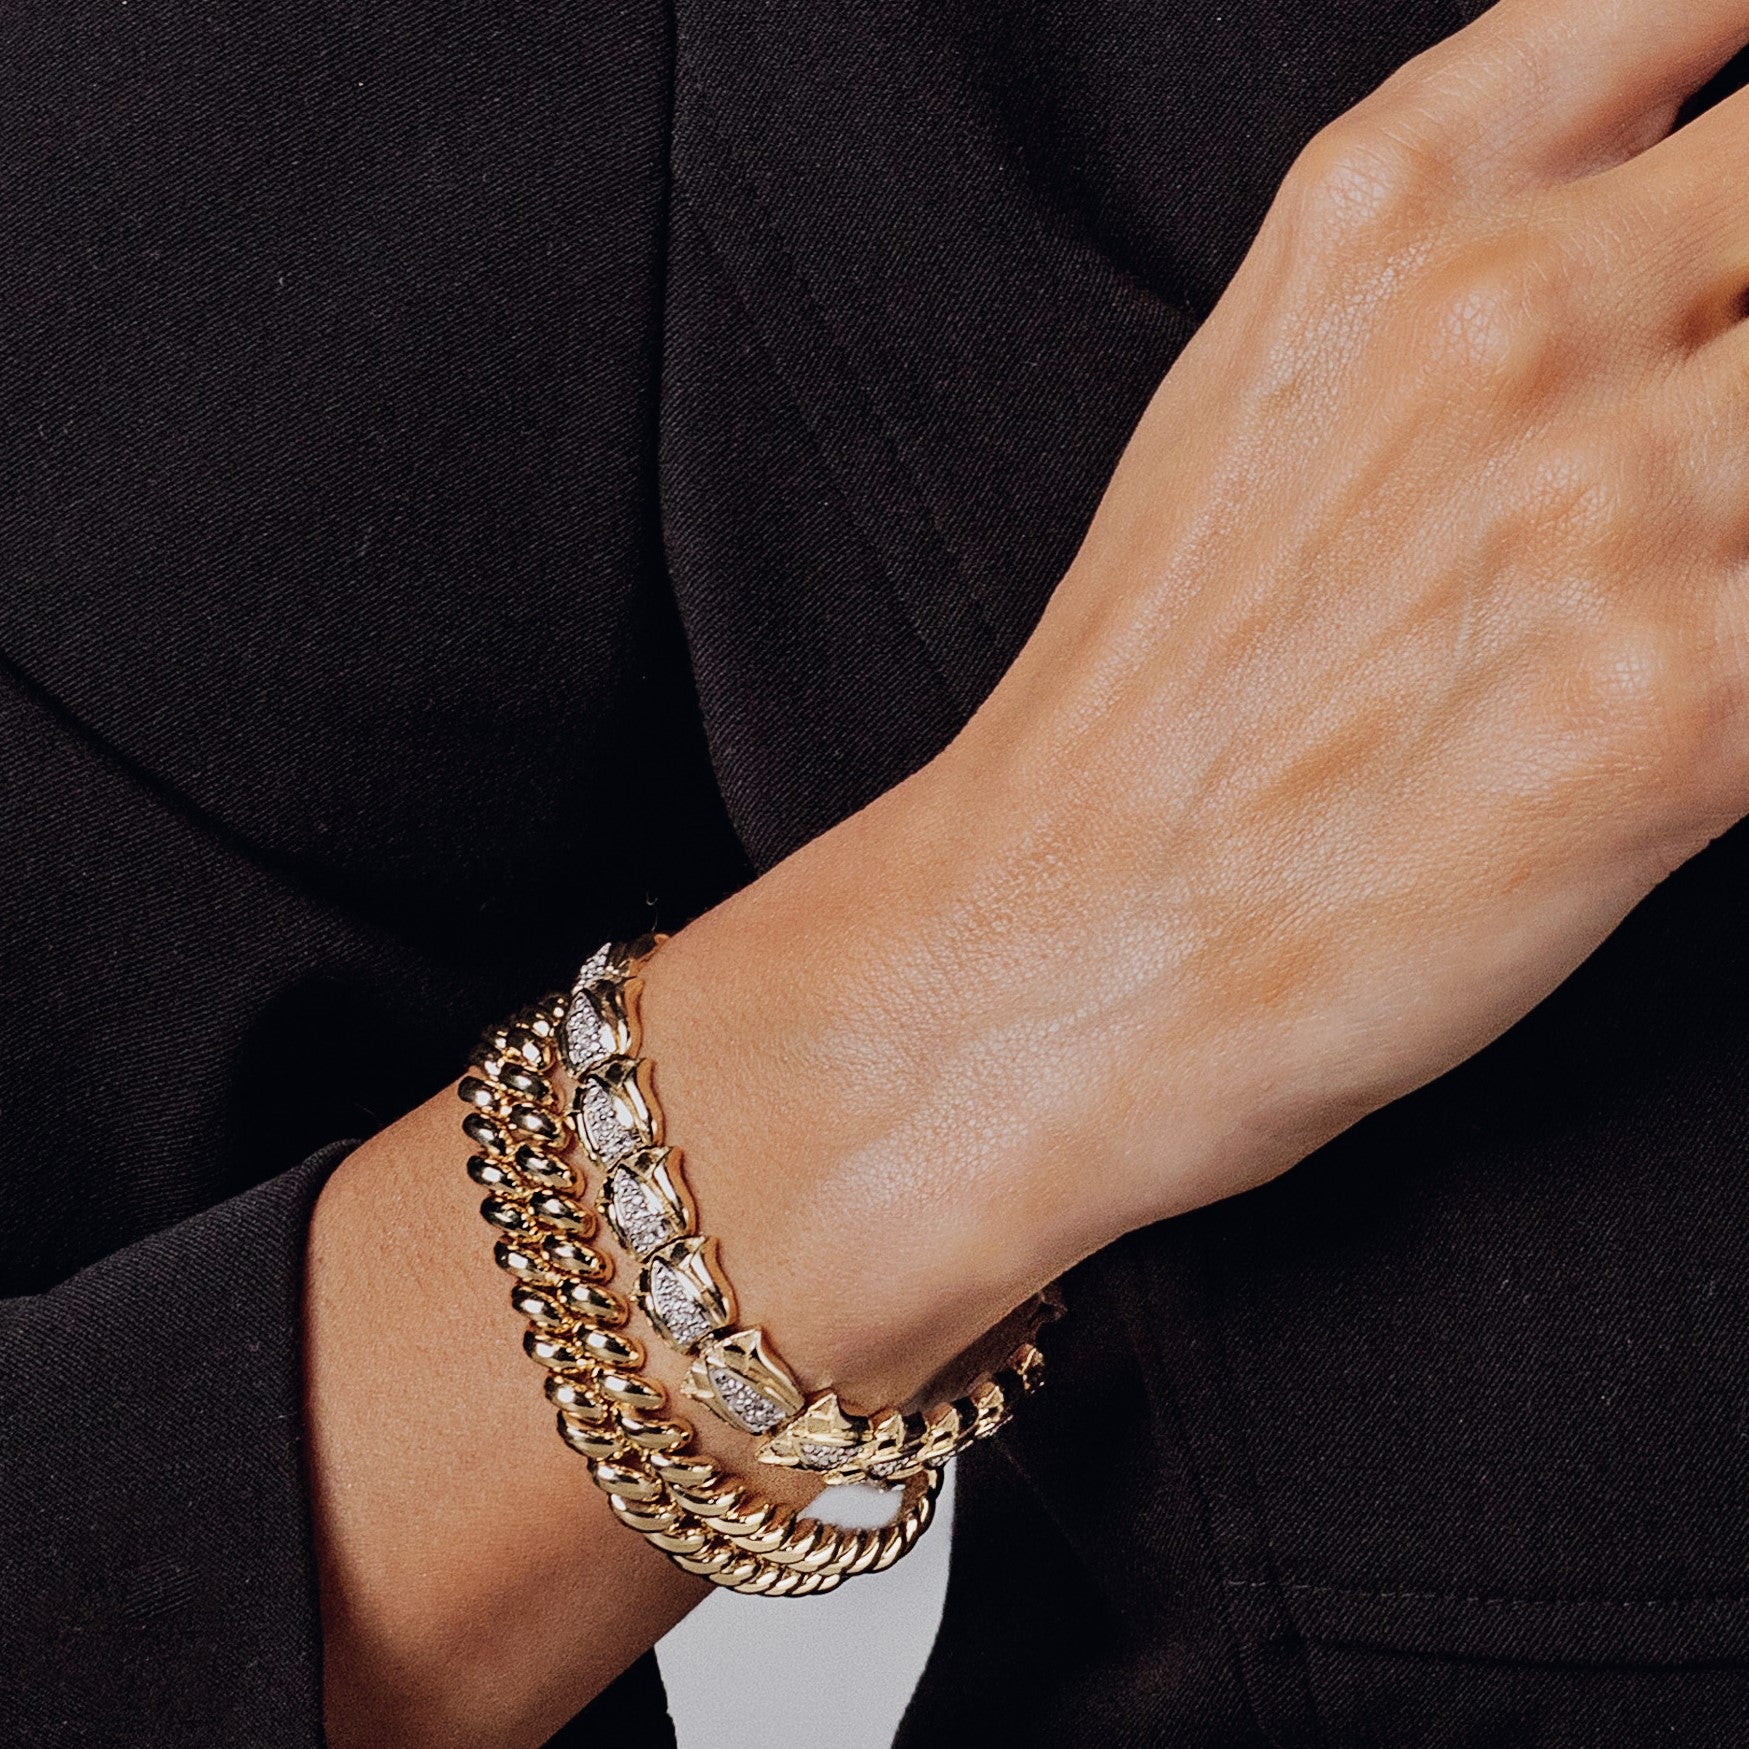 Lotus flower and San Marco bracelets worn on a woman’s wrist.